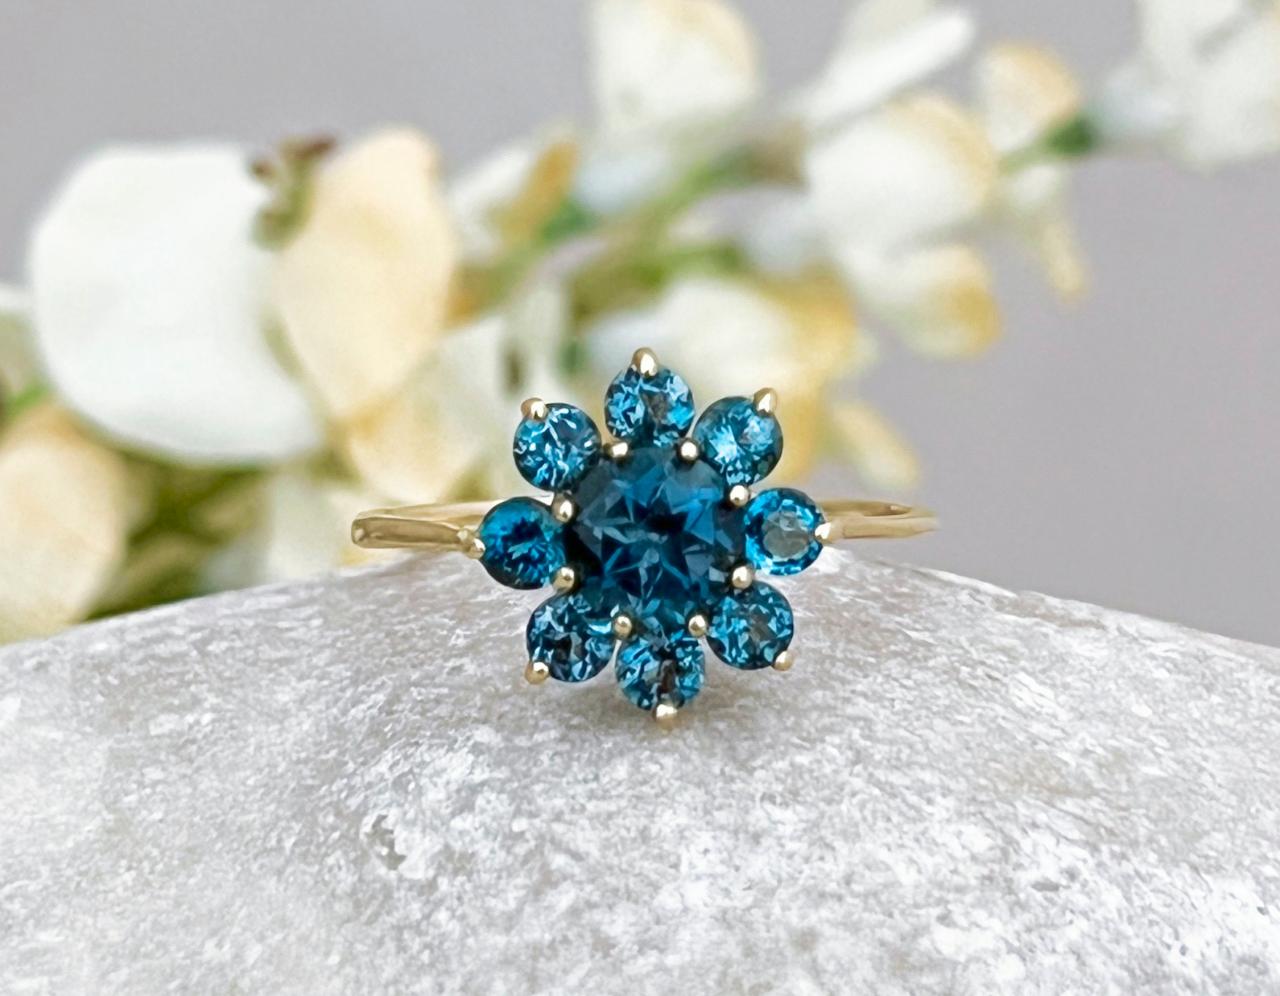 Floral Shape Solid Gold Engagement Ring With London Blue Topaz, Halo Gemstone Dainty Bridal Ring, 18k Vintage Flower Ring